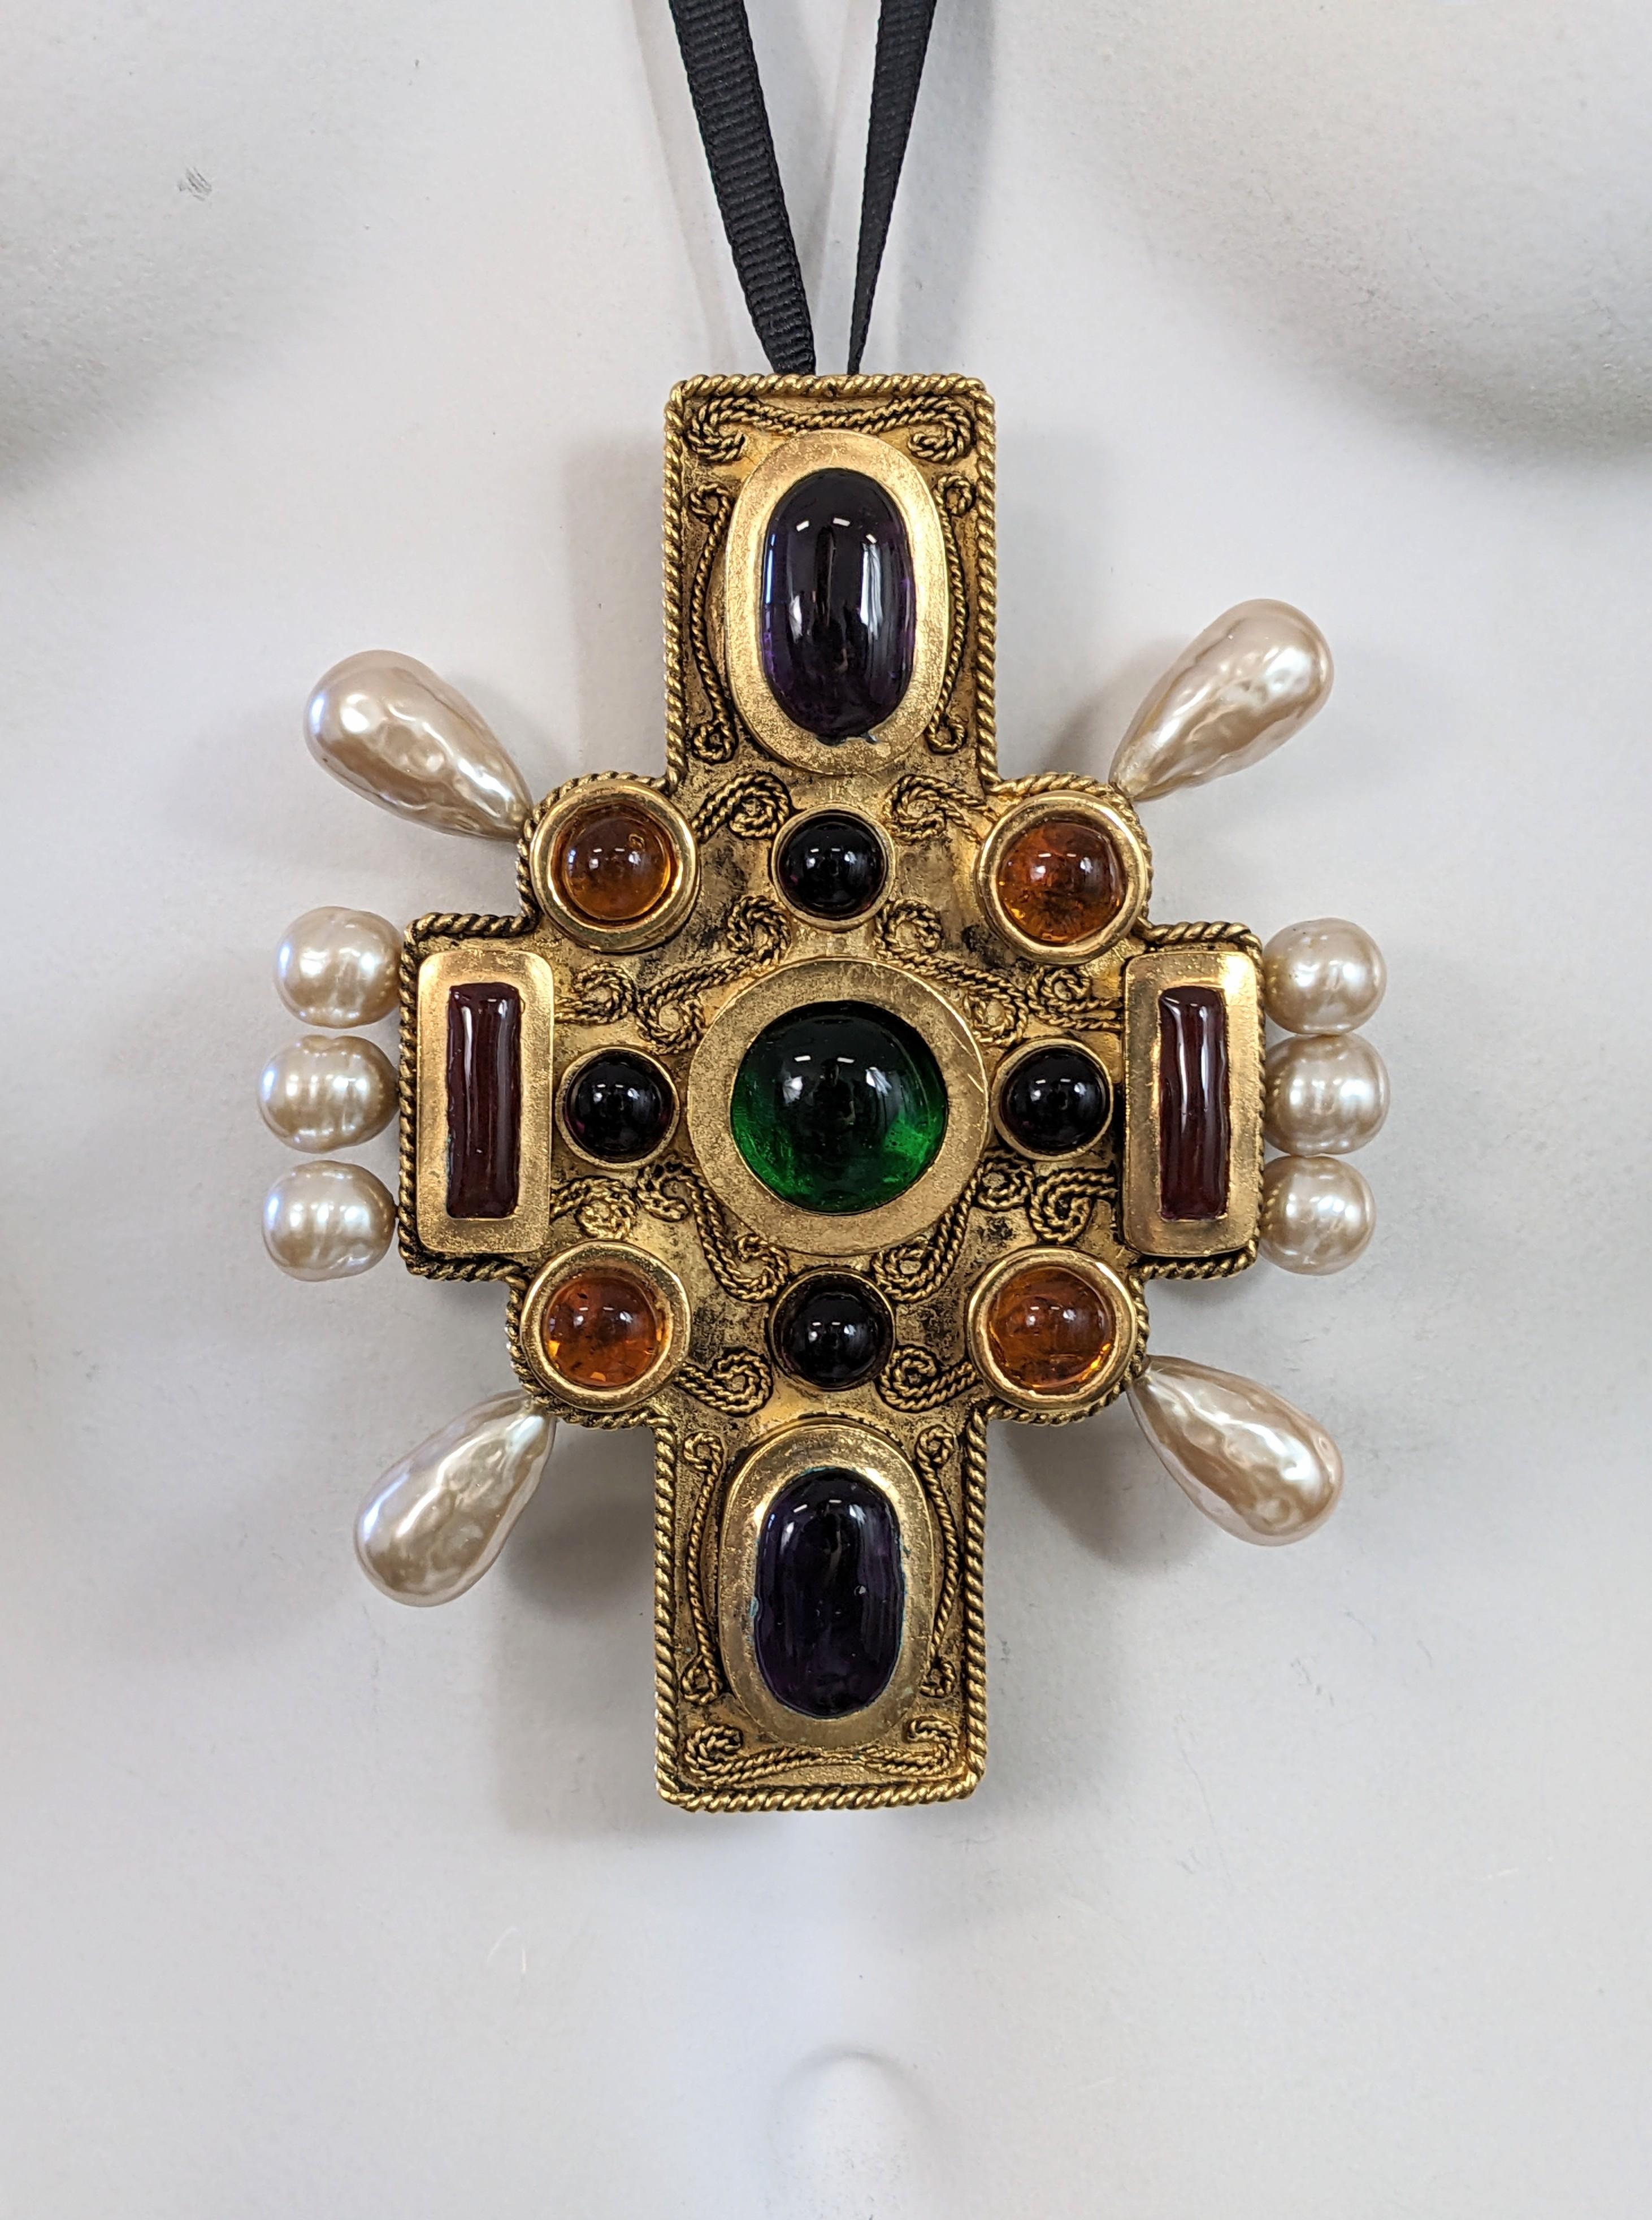 Chanel Massive Byzantine Cross Pendant Brooch by Maison Gripoix For Sale 4